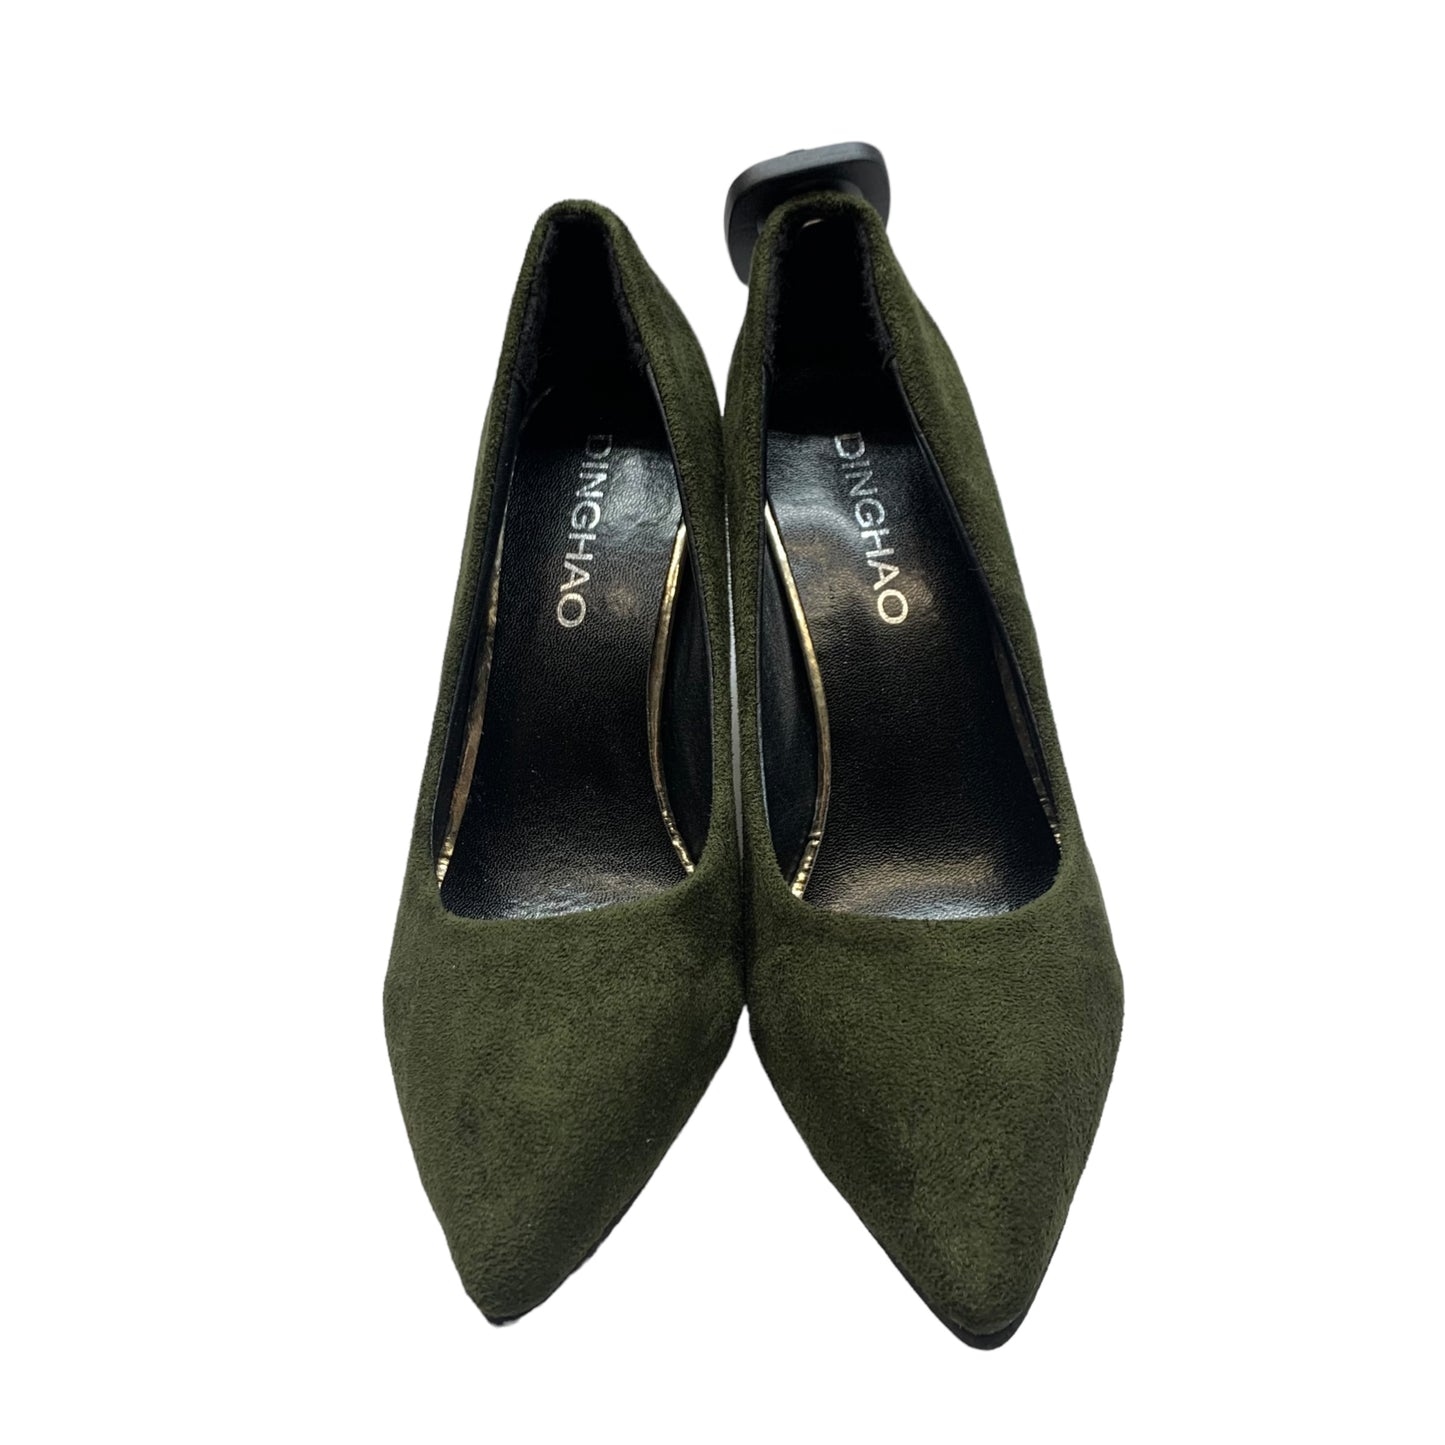 Shoes Heels Stiletto By Sam Edelman  Size: 7.5